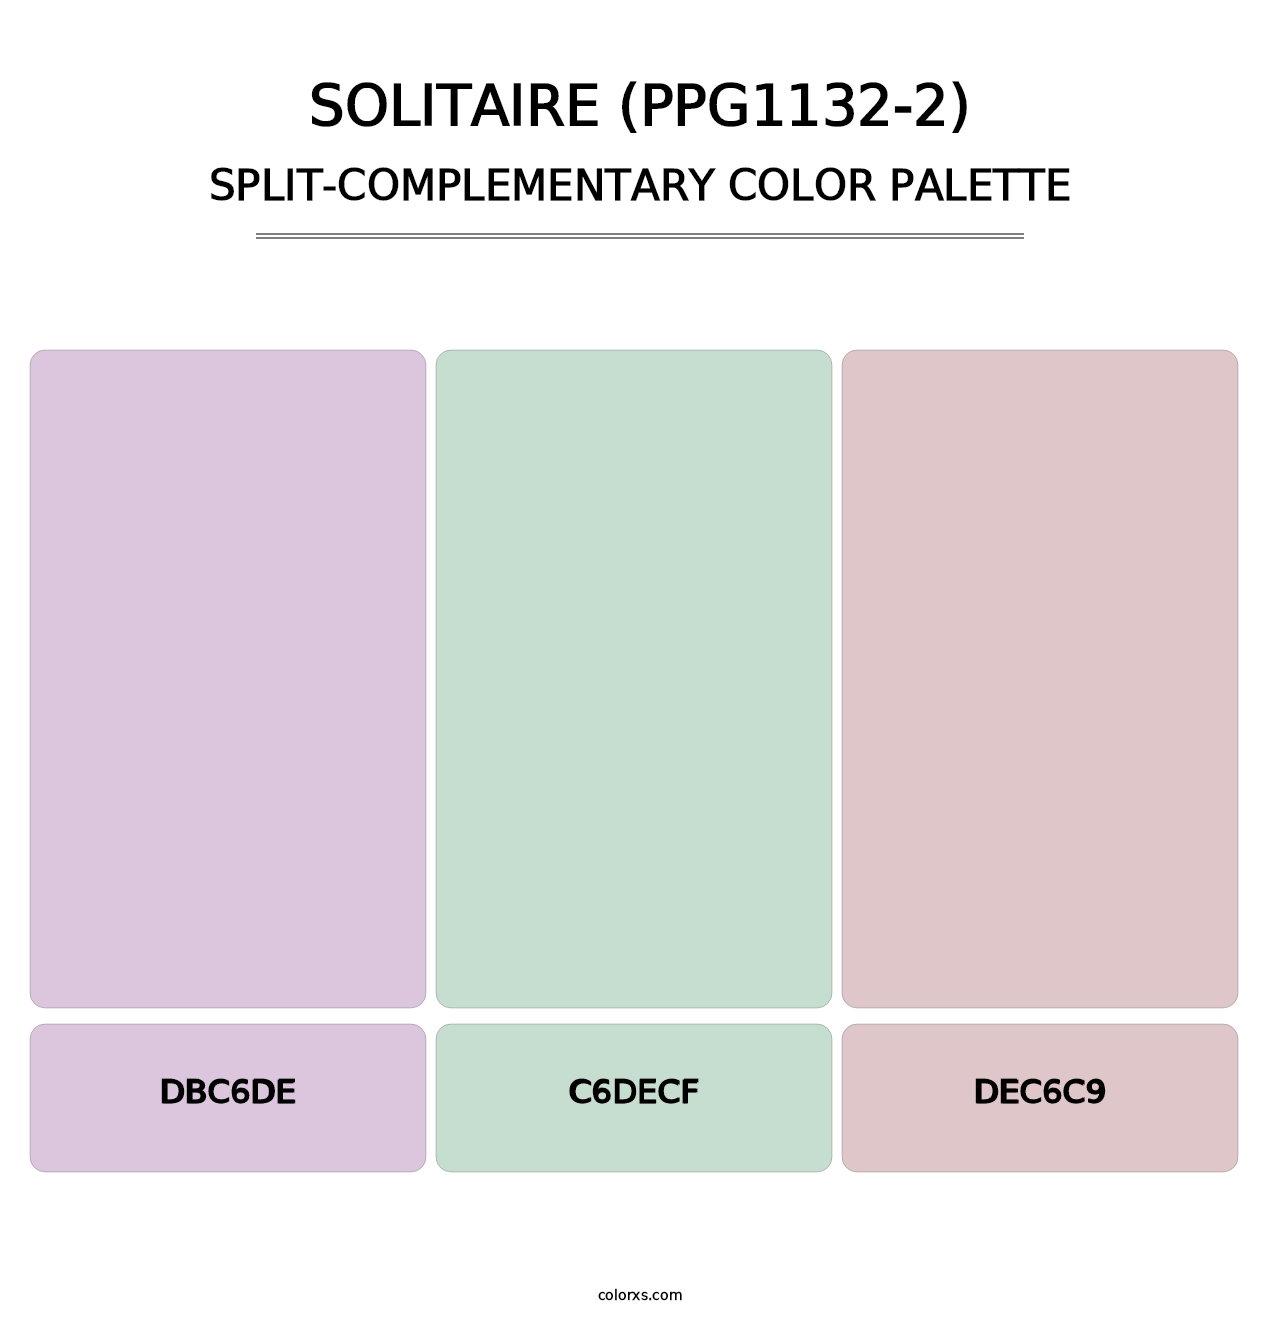 Solitaire (PPG1132-2) - Split-Complementary Color Palette